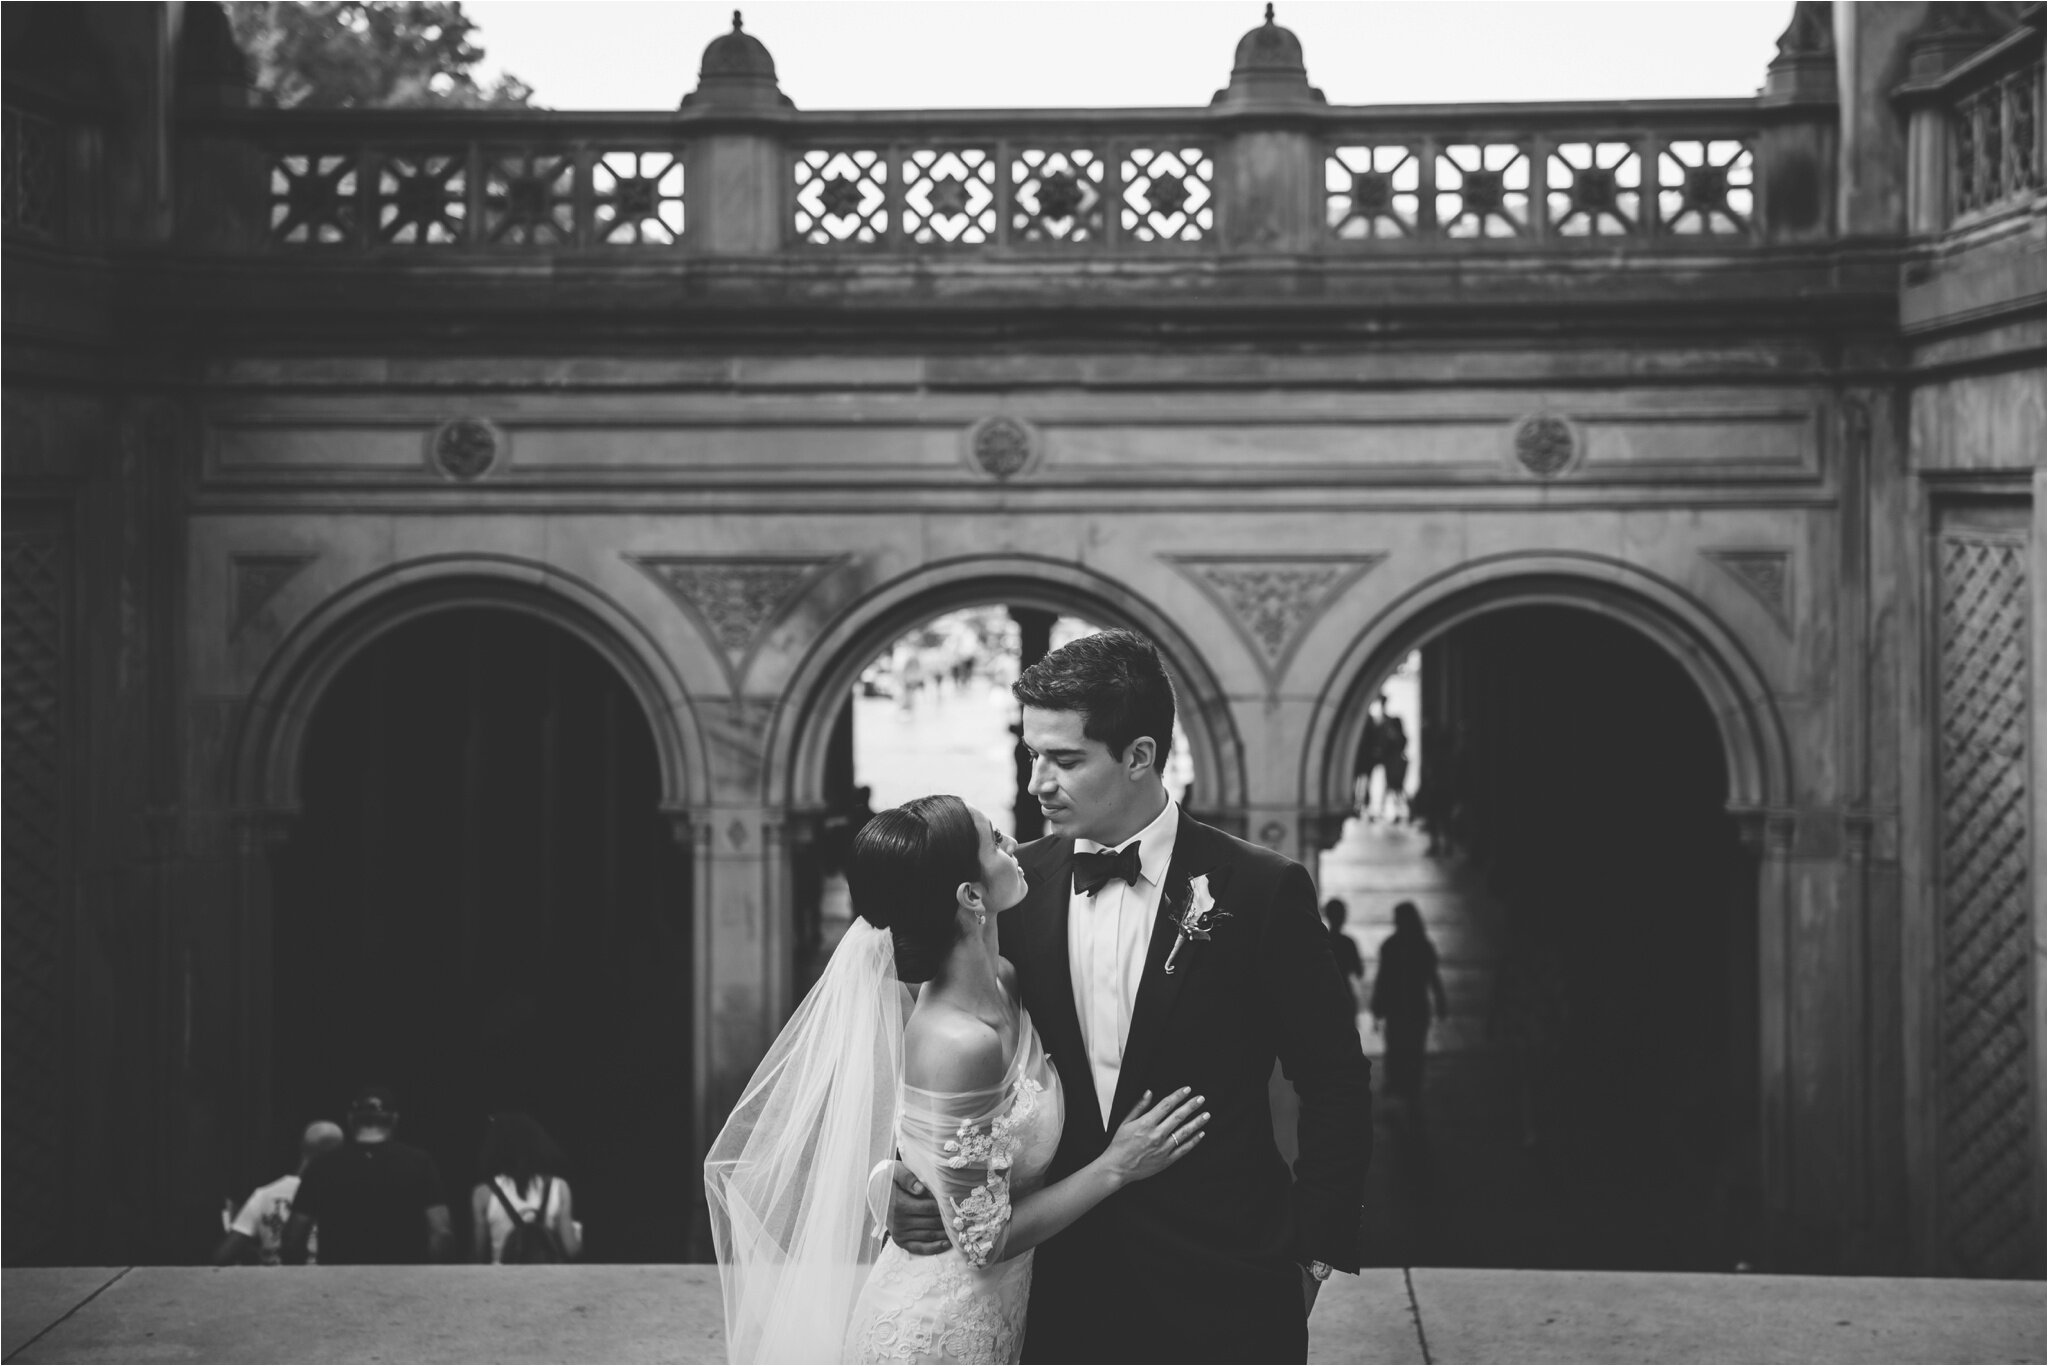 Lotte-New-York-Palace-NYC-Wedding-photographer-Brian-Hatton-Photography00001.jpg